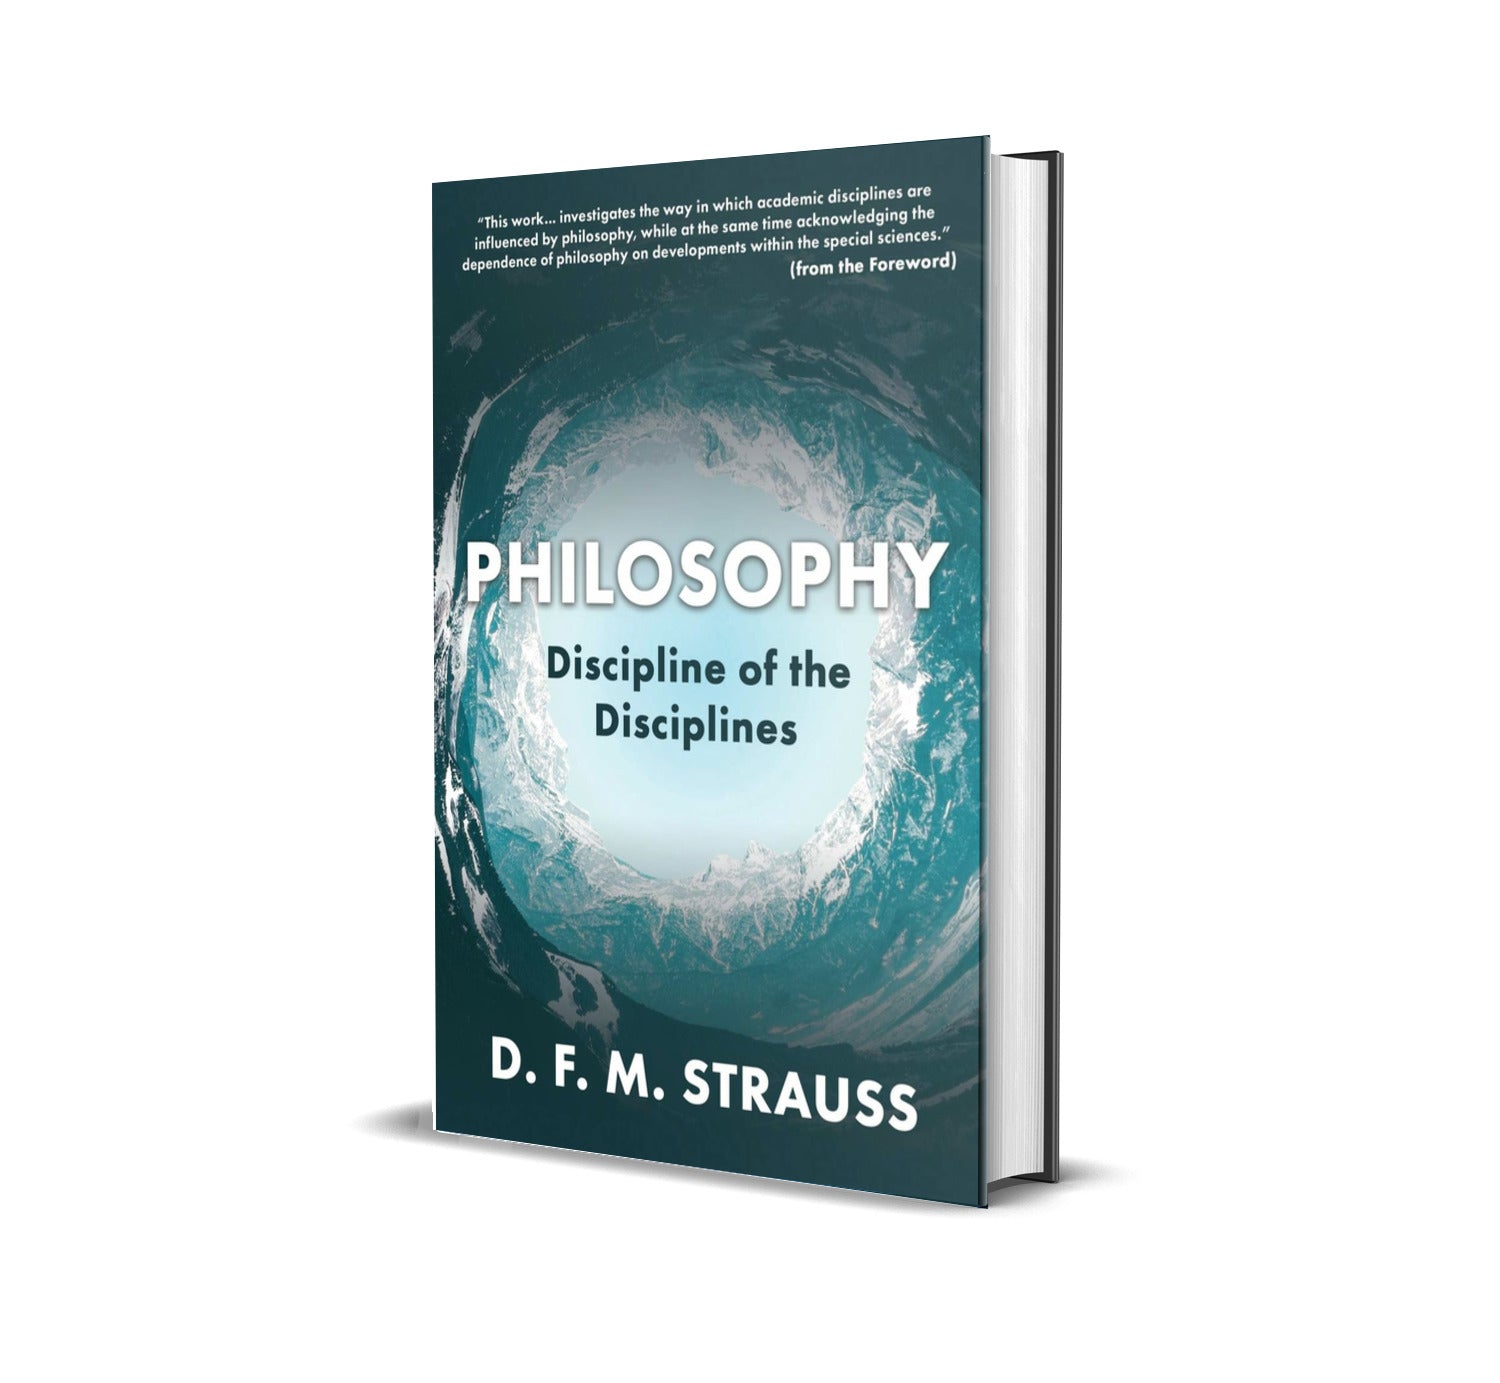 Philosophy: Discipline of the Disciplines